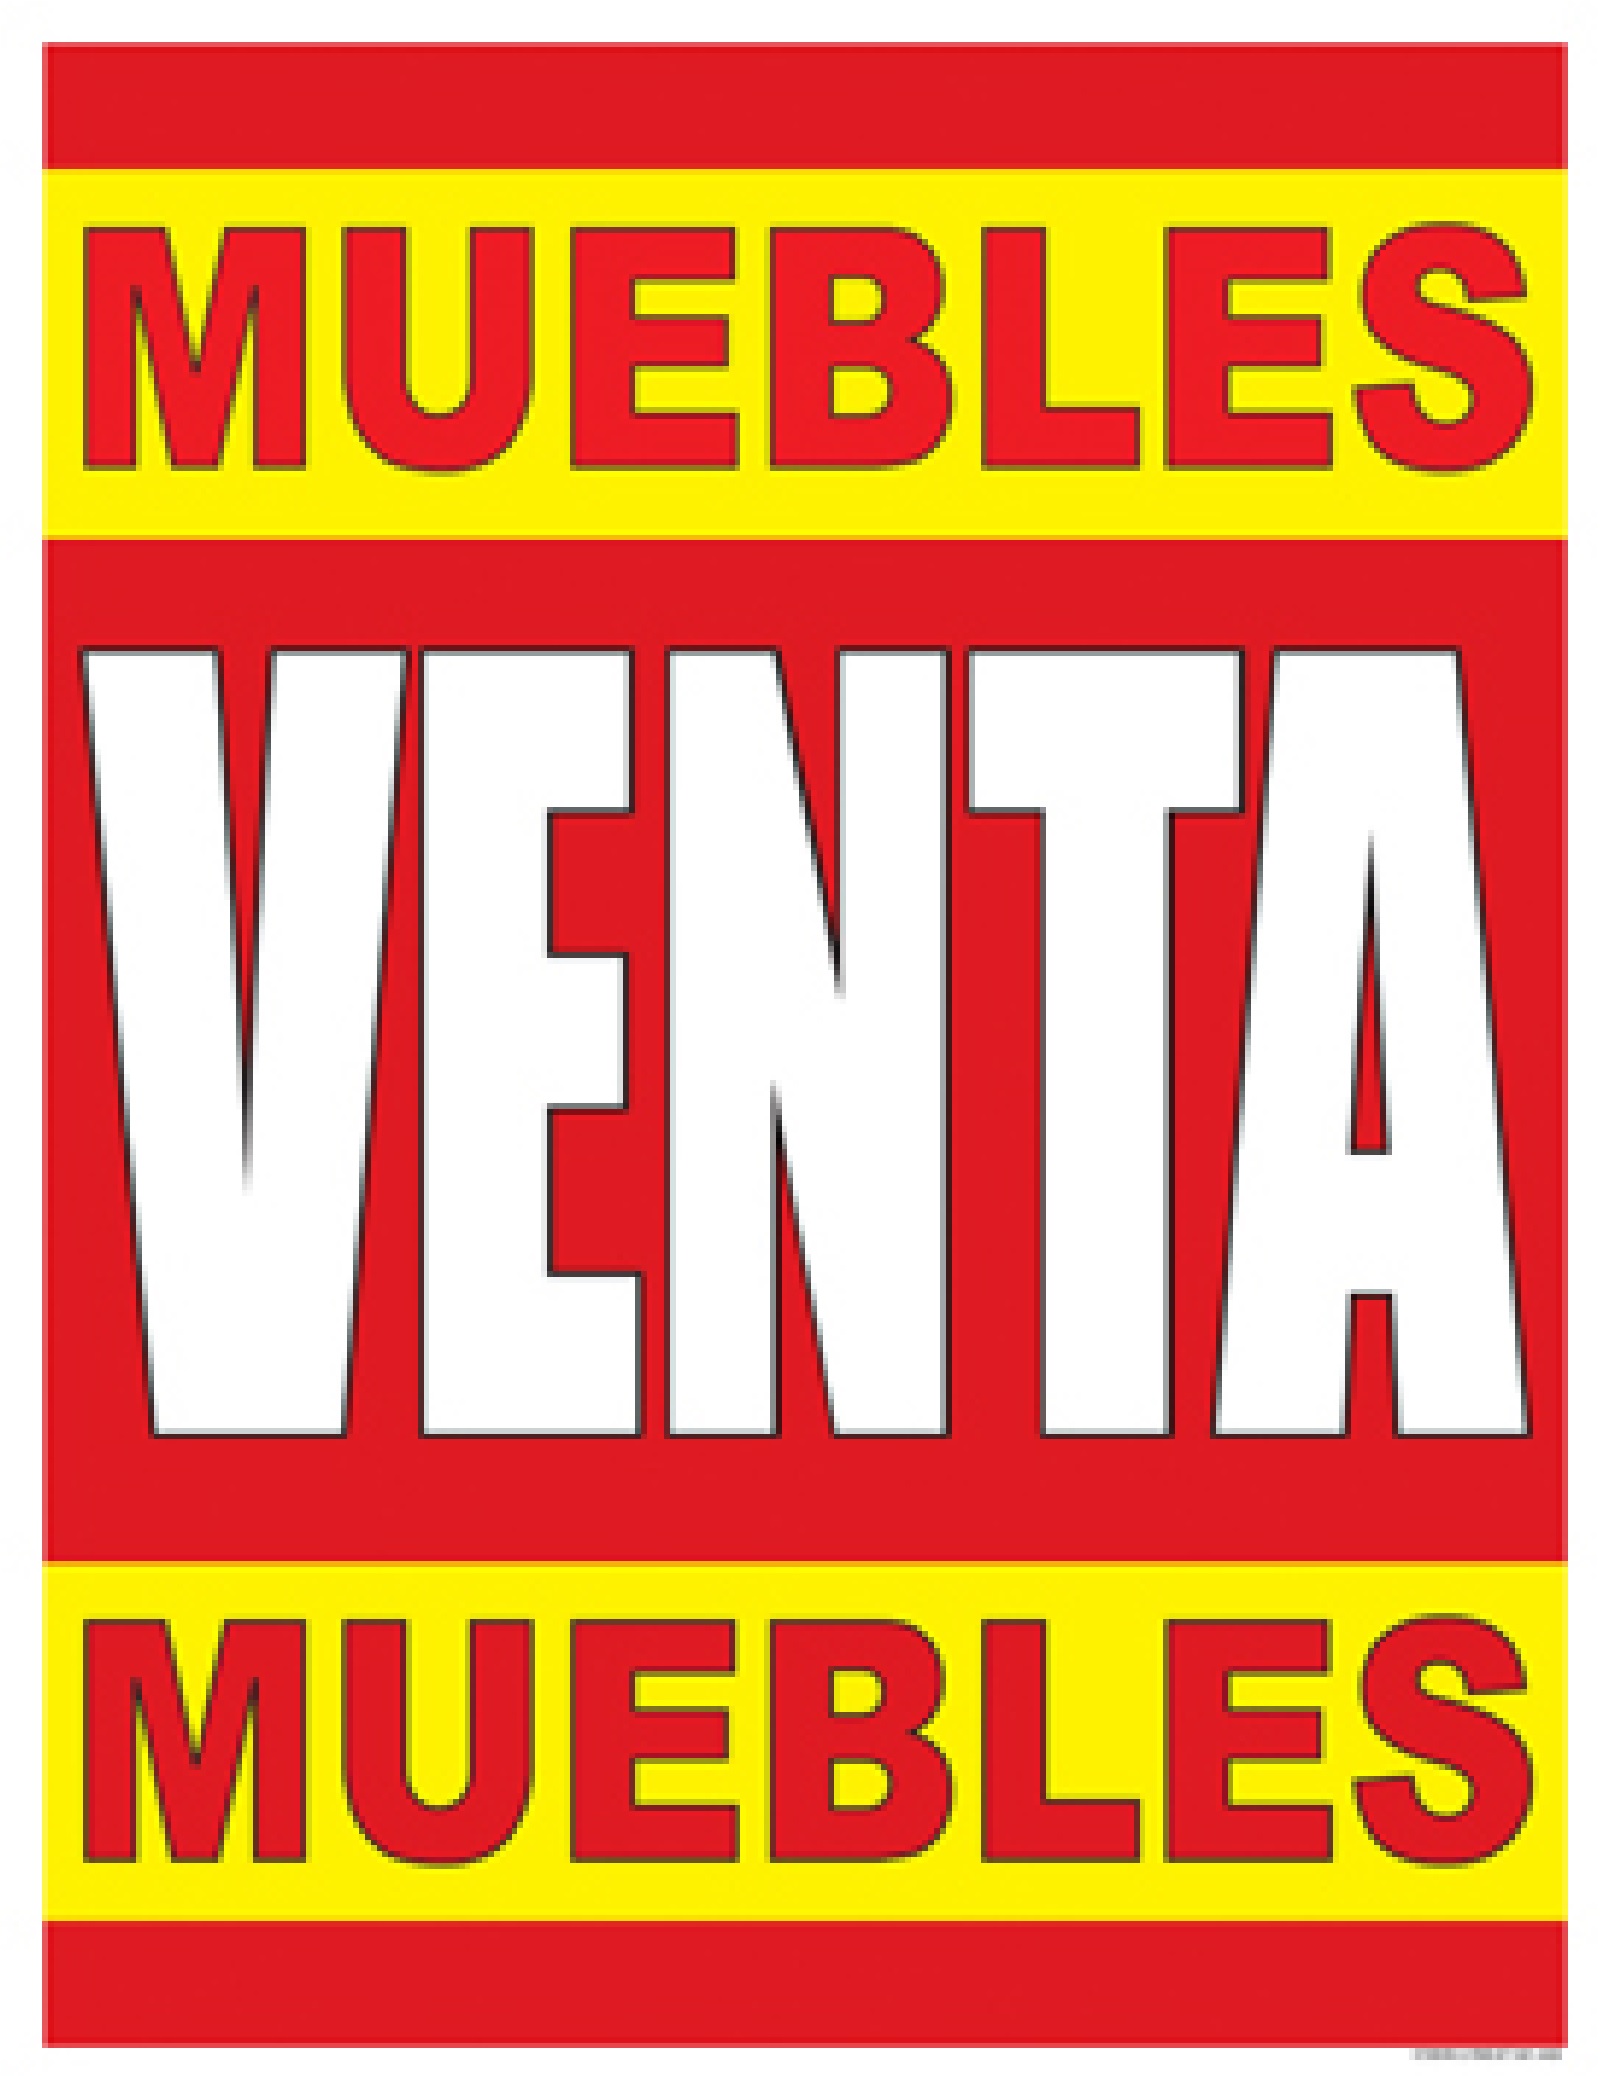 Muebles Venta Muebles SPANISH FURNITURE SALE Window Poster Sign 22x28